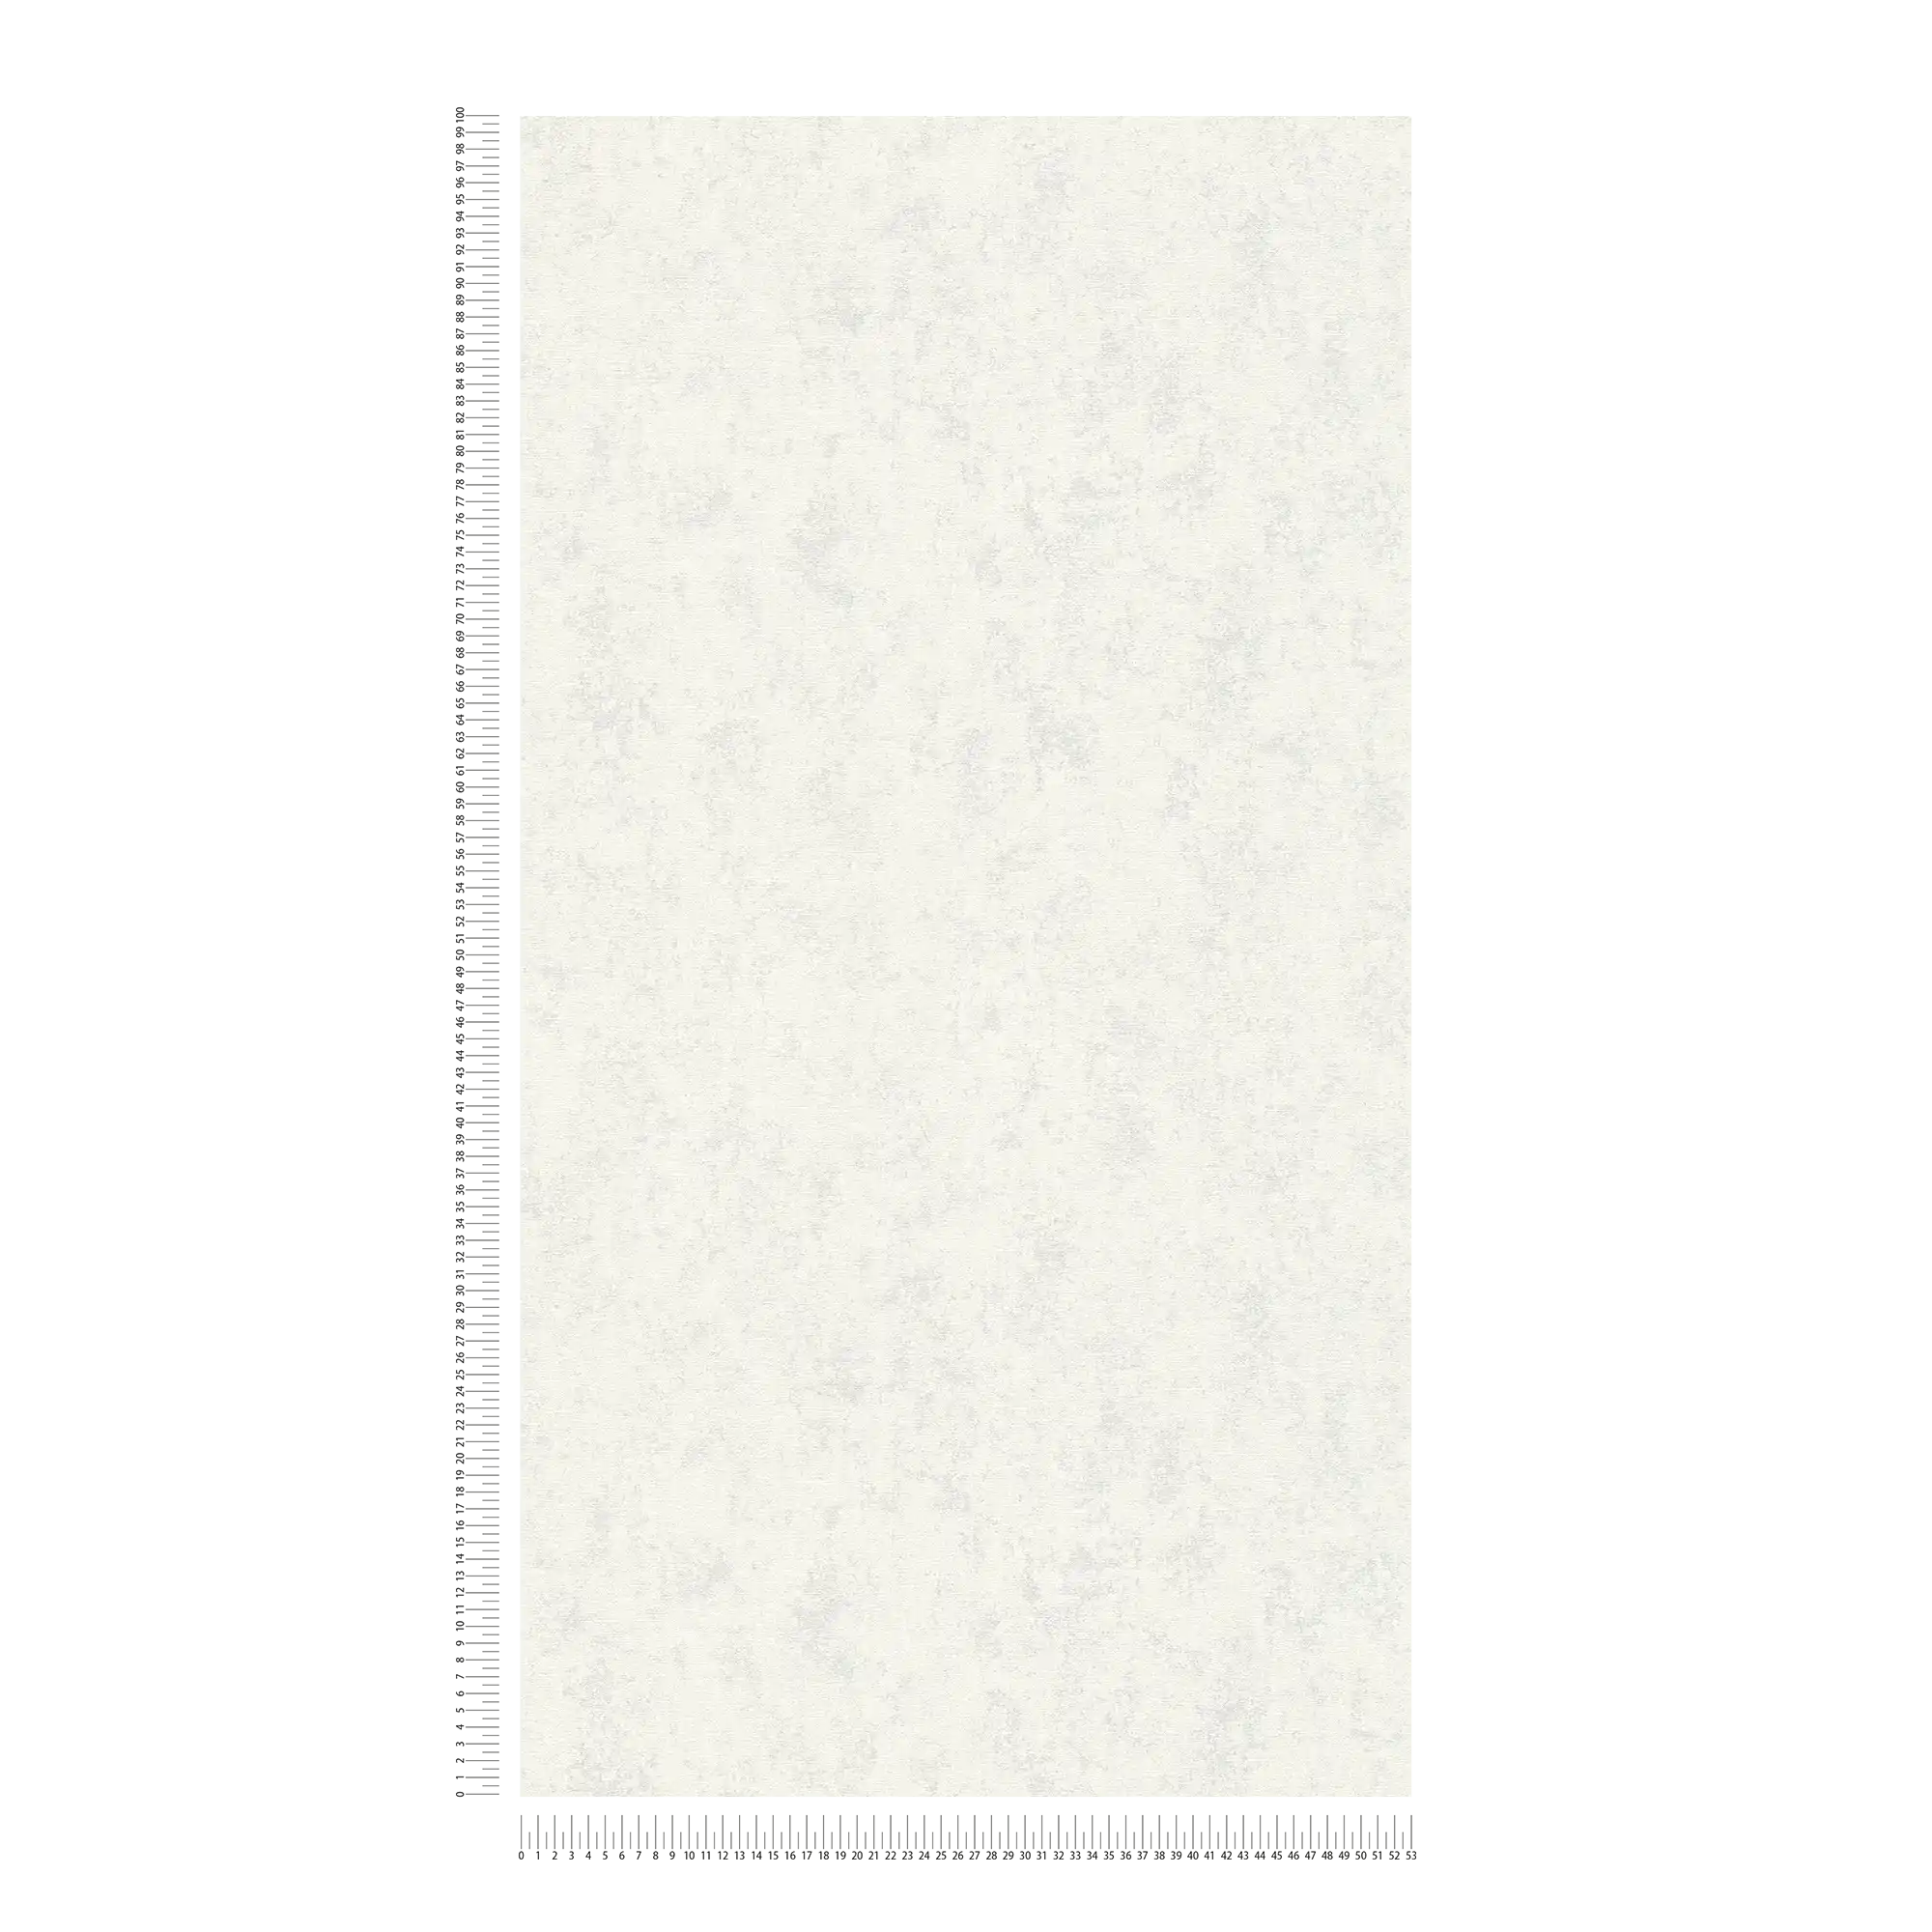             Carta da parati a tinta unita in stile Scandi - grigio, bianco
        